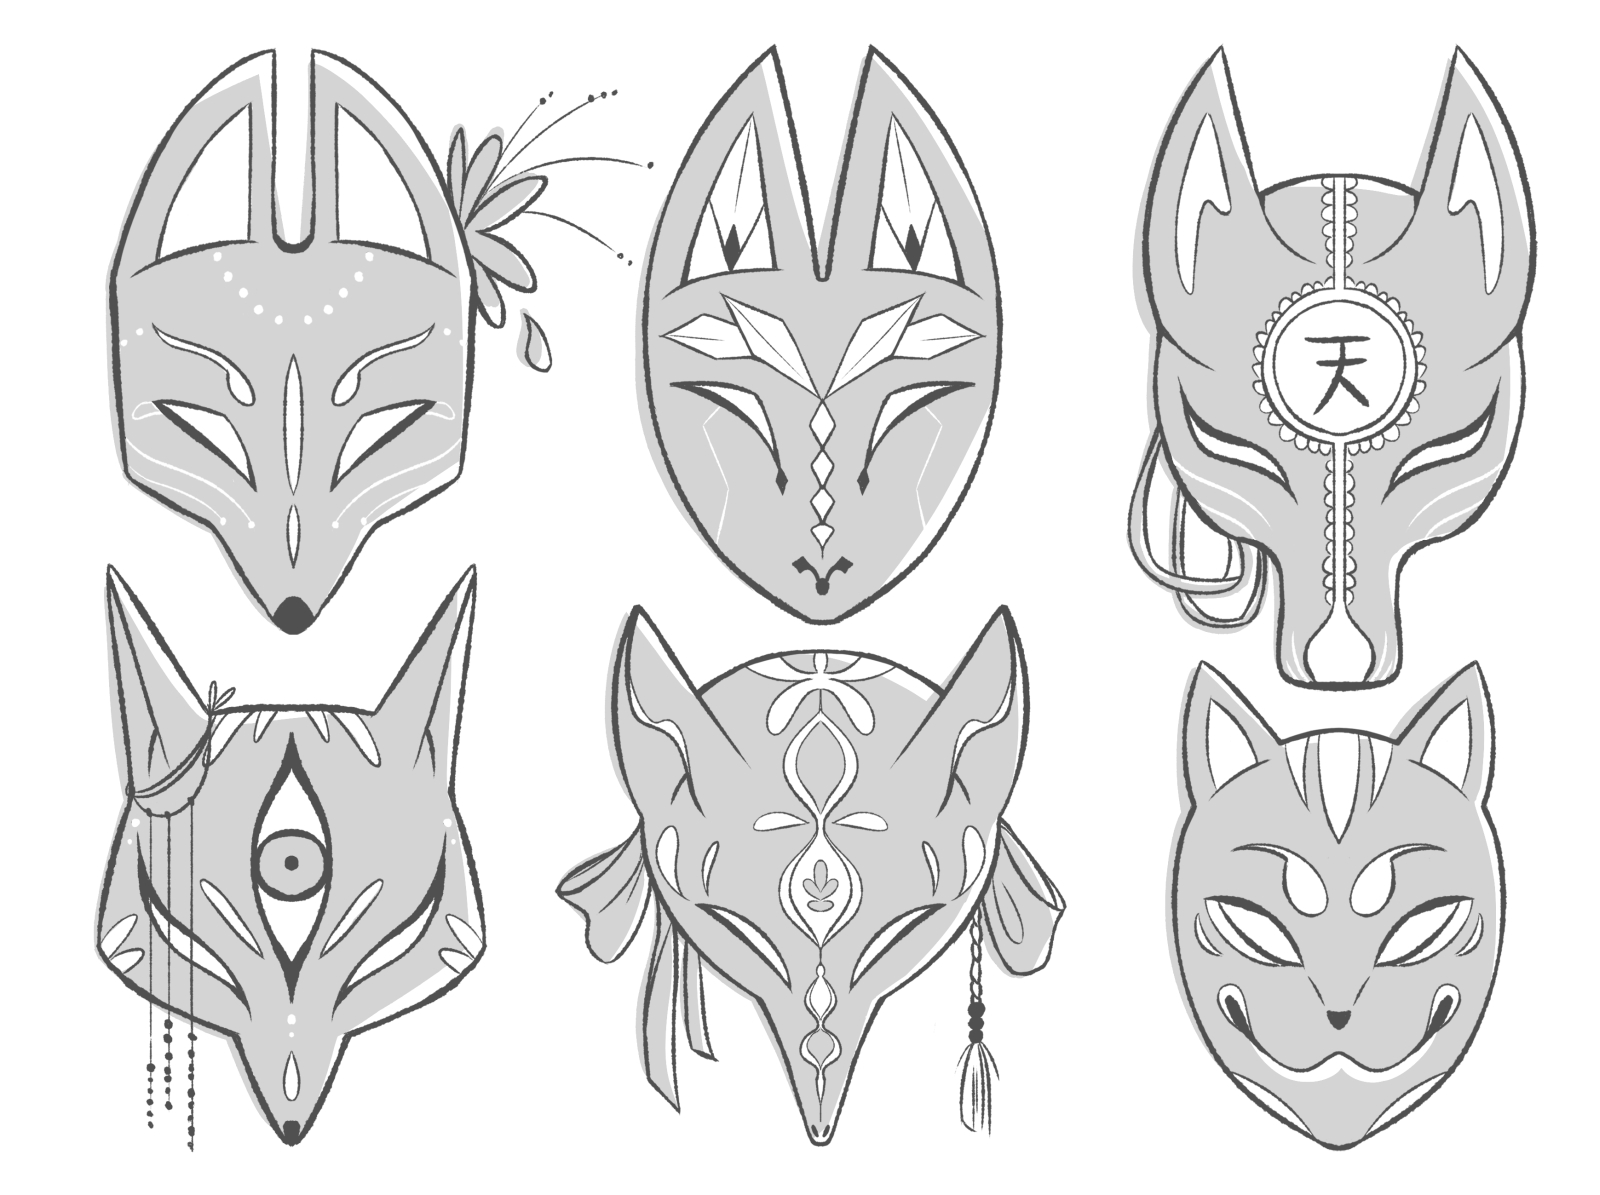 Kitsune masks by Debora Mestieri on Dribbble